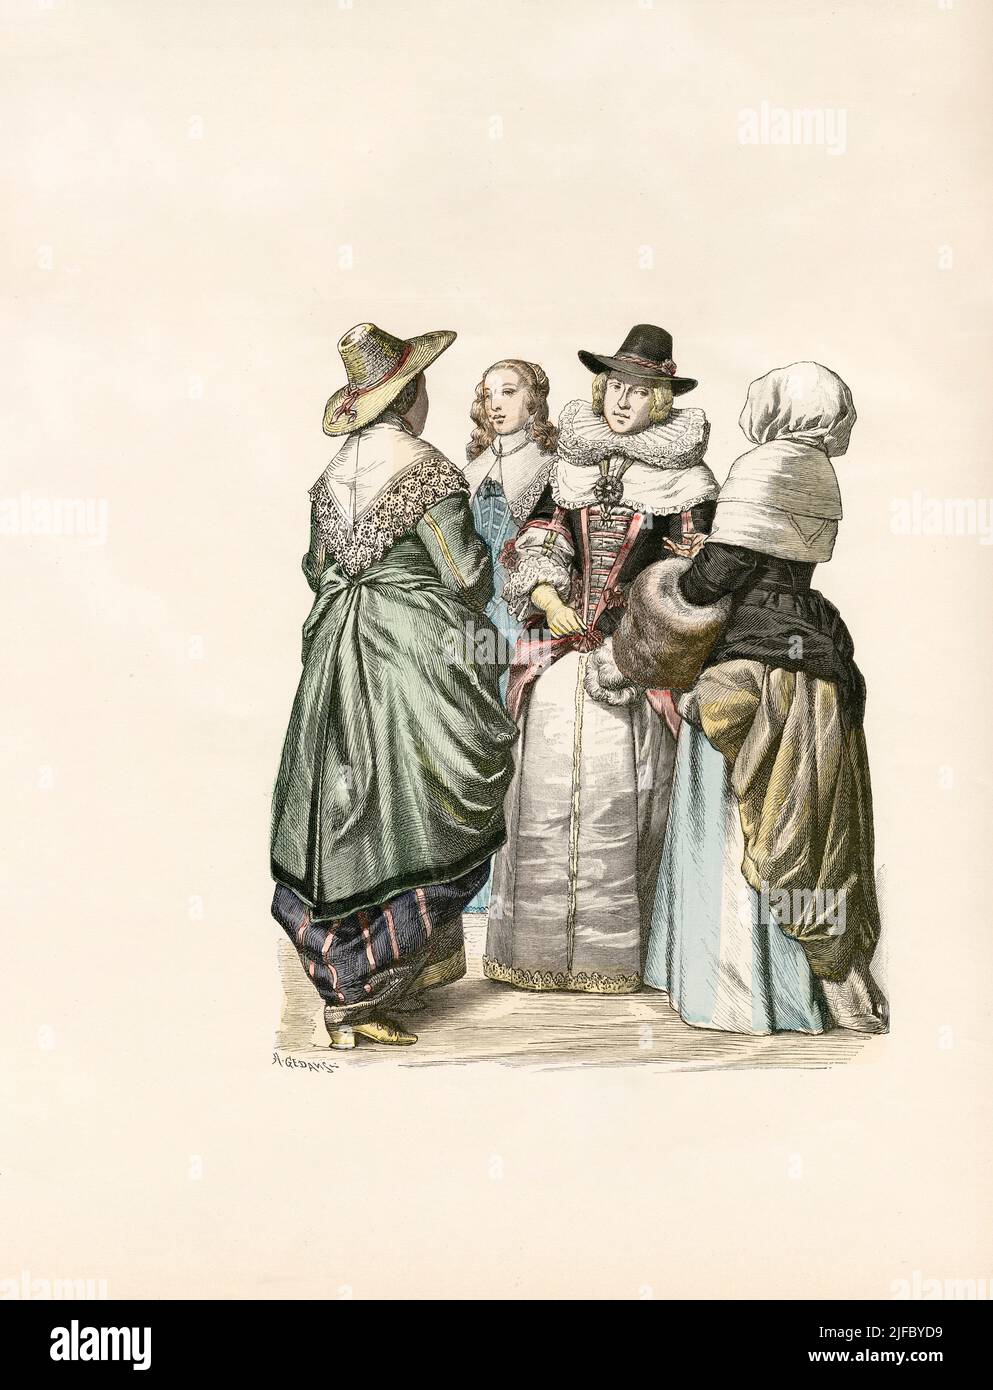 Townswoman, Lady in Street Dress, Lord Mayor's Wife, Matron, England, 1640, Illustration, The History of Costume, Braun & Schneider, Munich, Germany, 1861-1880 Stock Photo